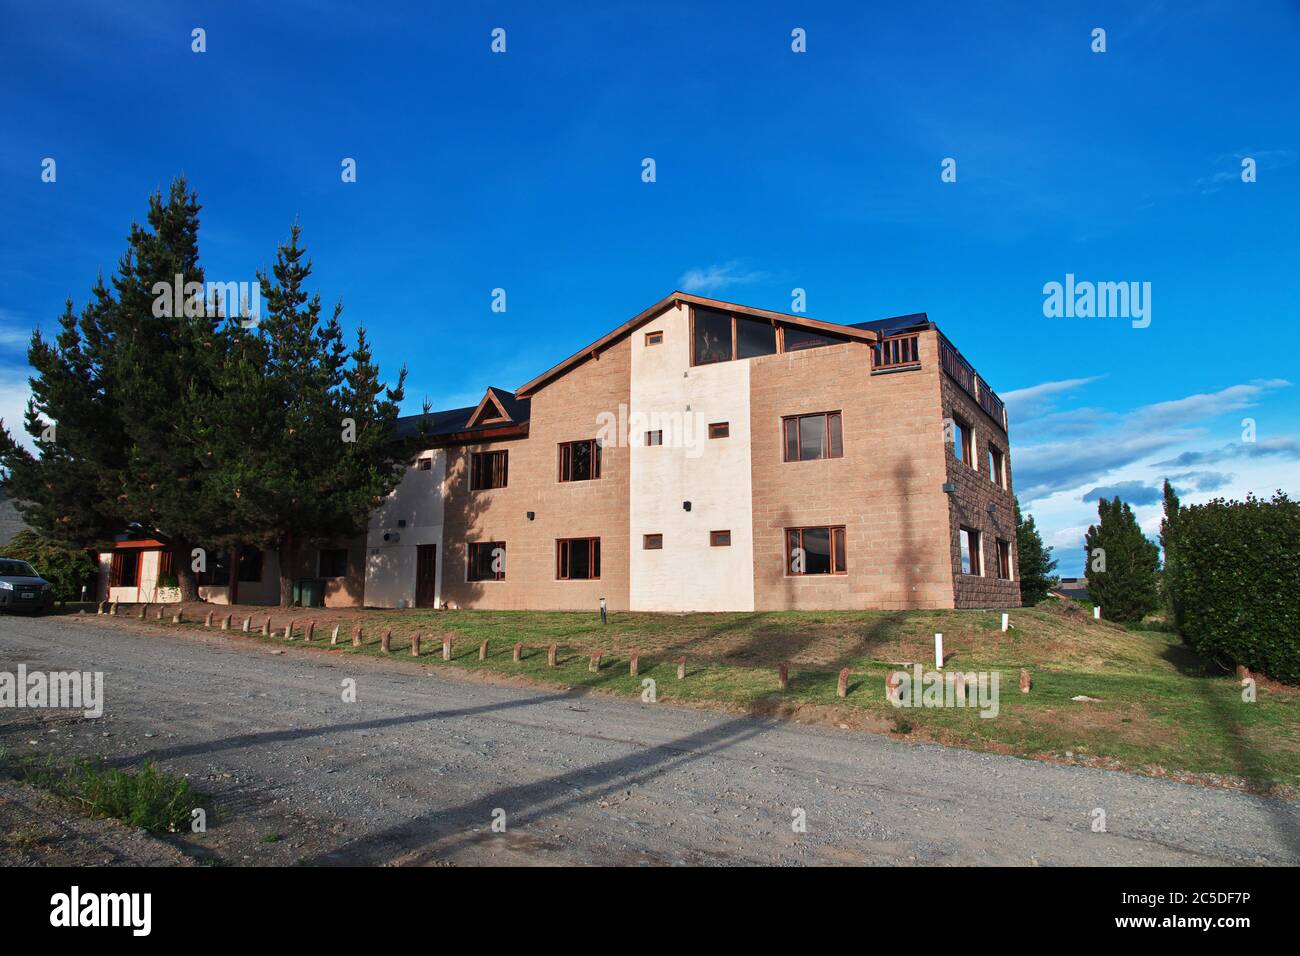 The hotel in El Calafate, Patagonia, Argentina Stock Photo